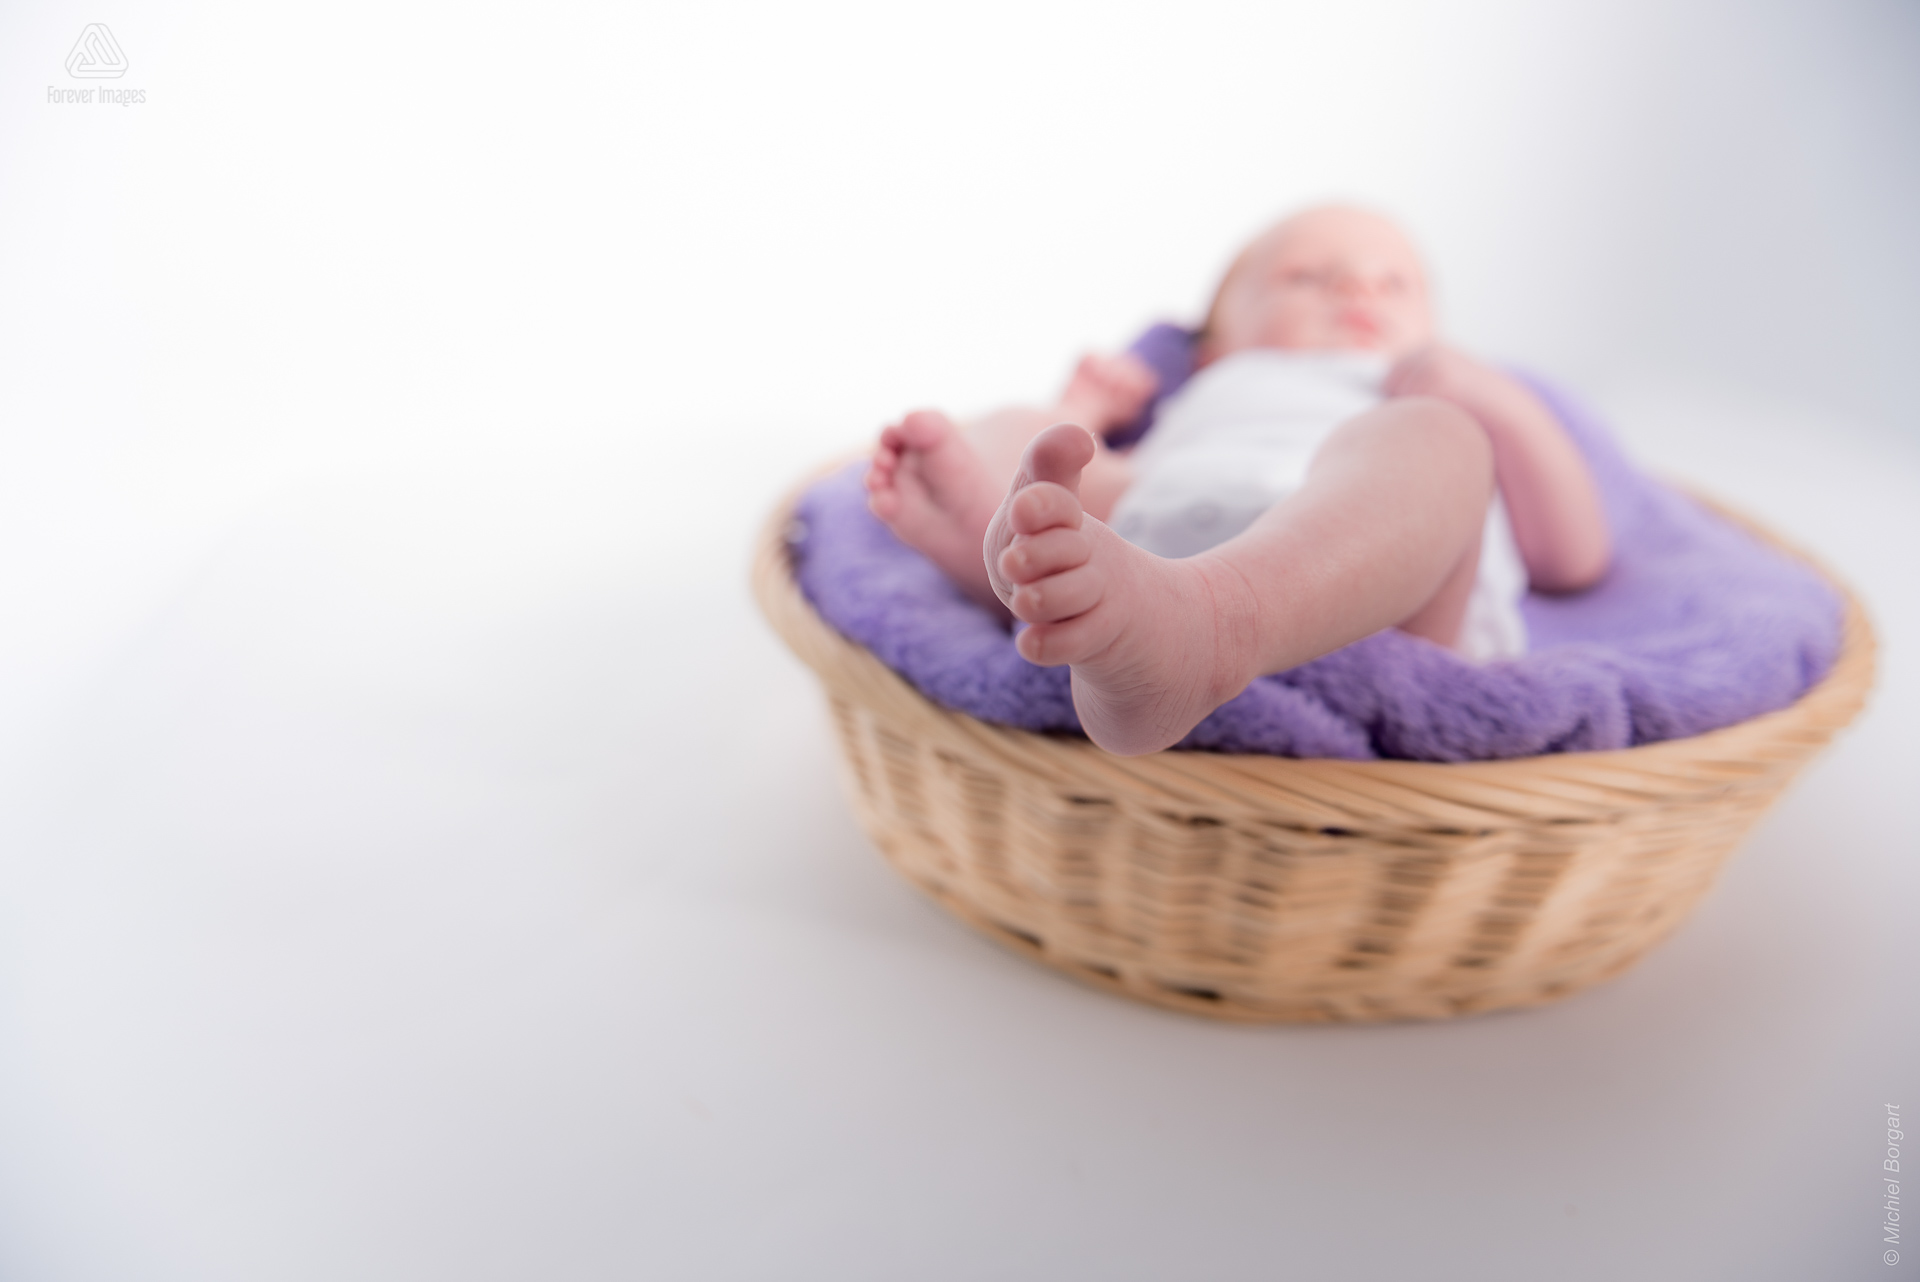 Portrait photo newborn baby new born focused on his foot | Kylian | Portrait Photographer Michiel Borgart - Forever Images.